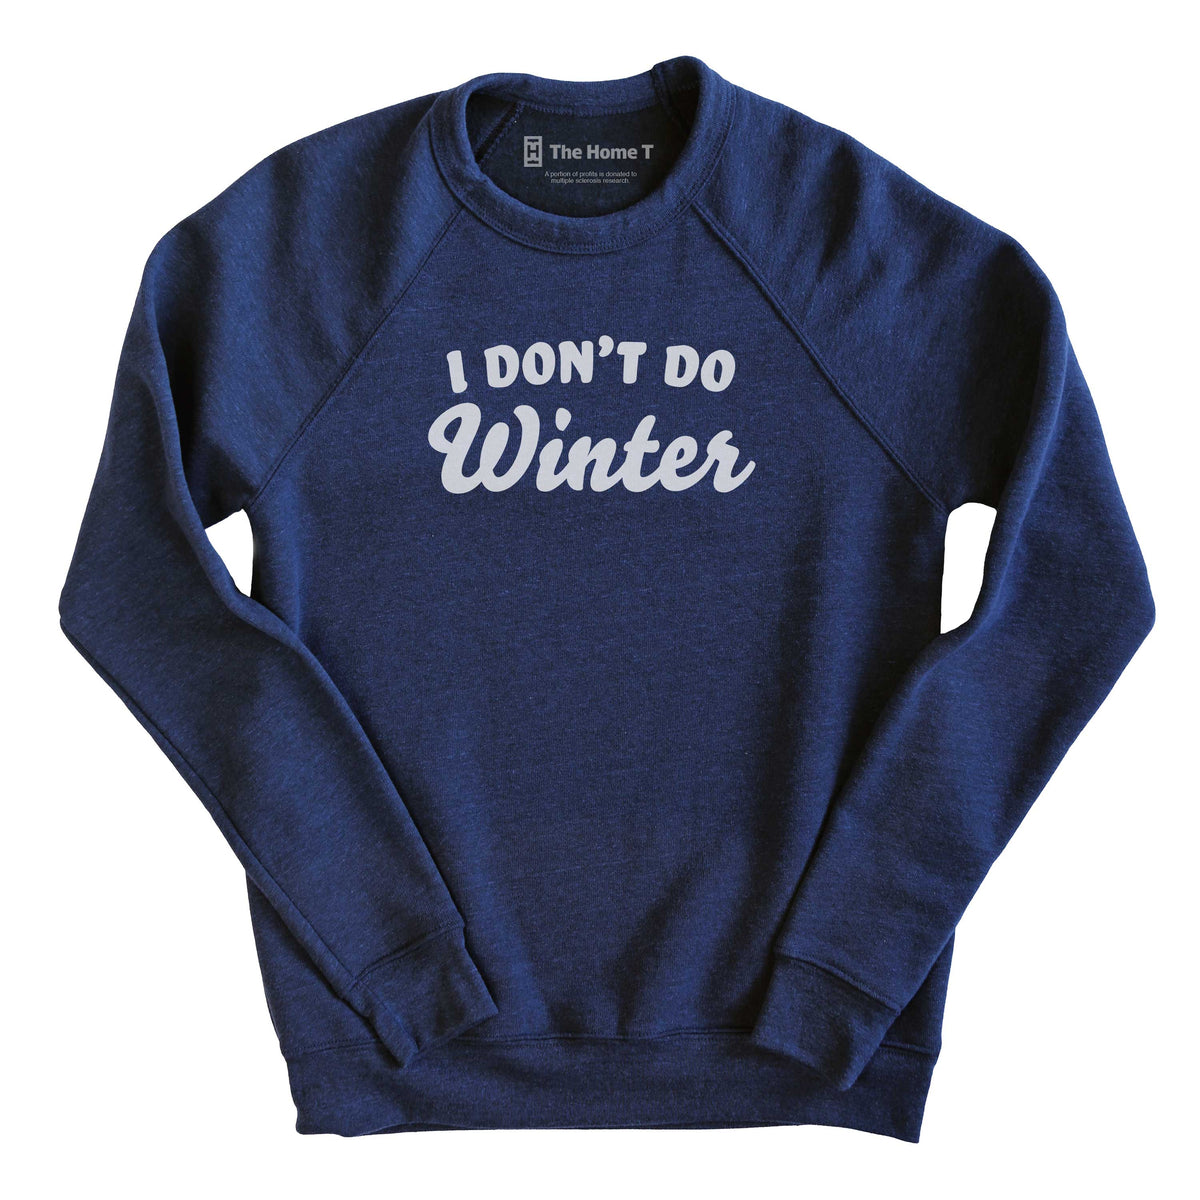 I Don't Do Winter Crew neck The Home T XS Sweatshirt